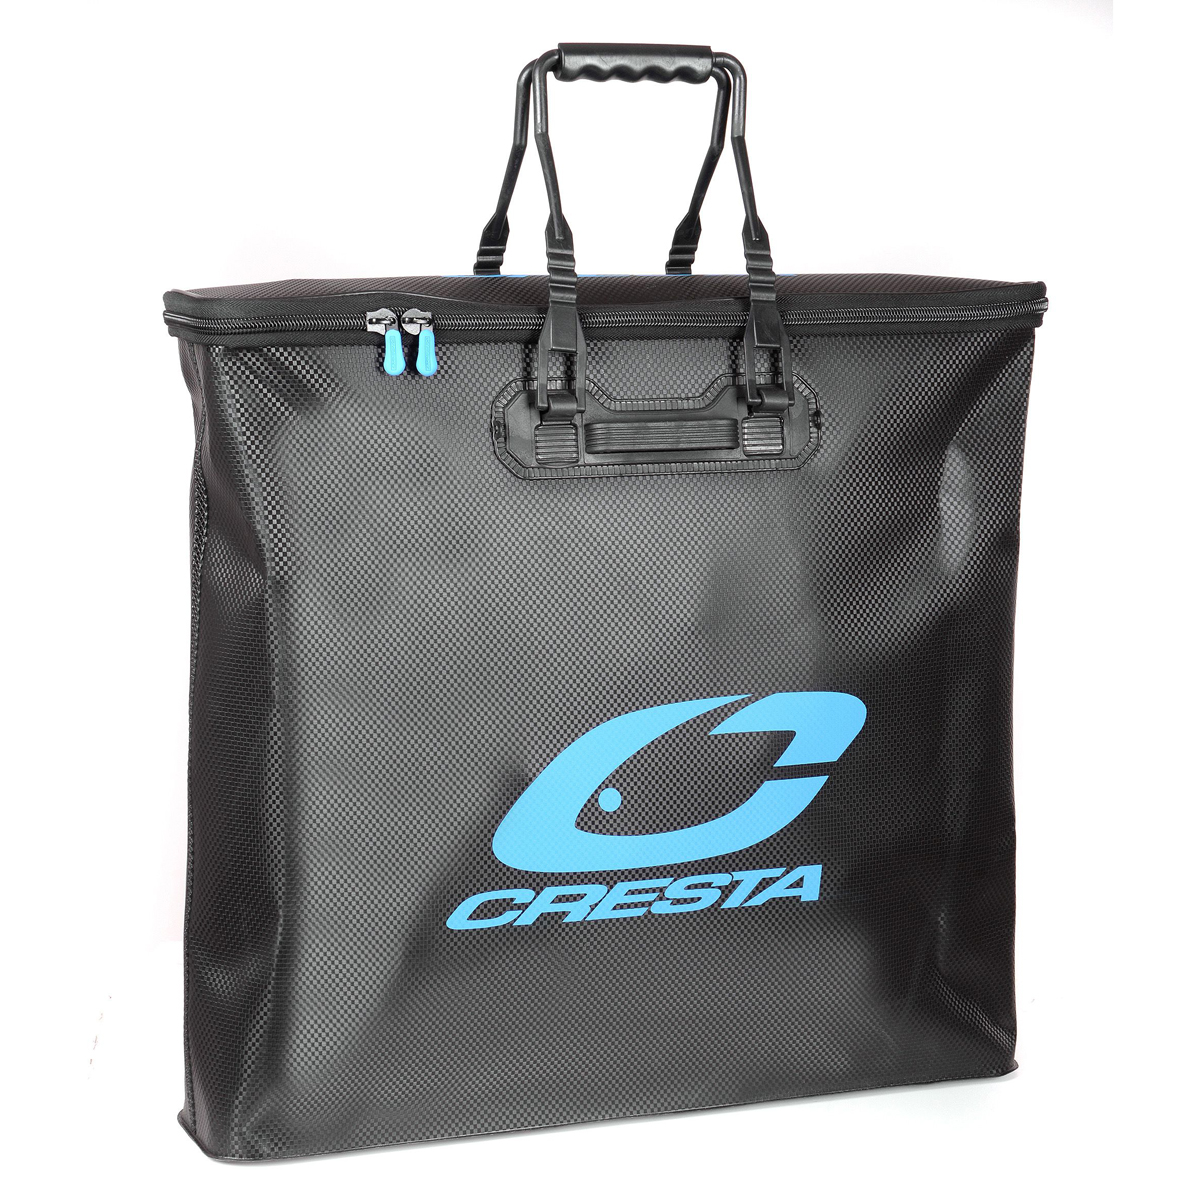 Cresta EVA Keepnetbag Compact